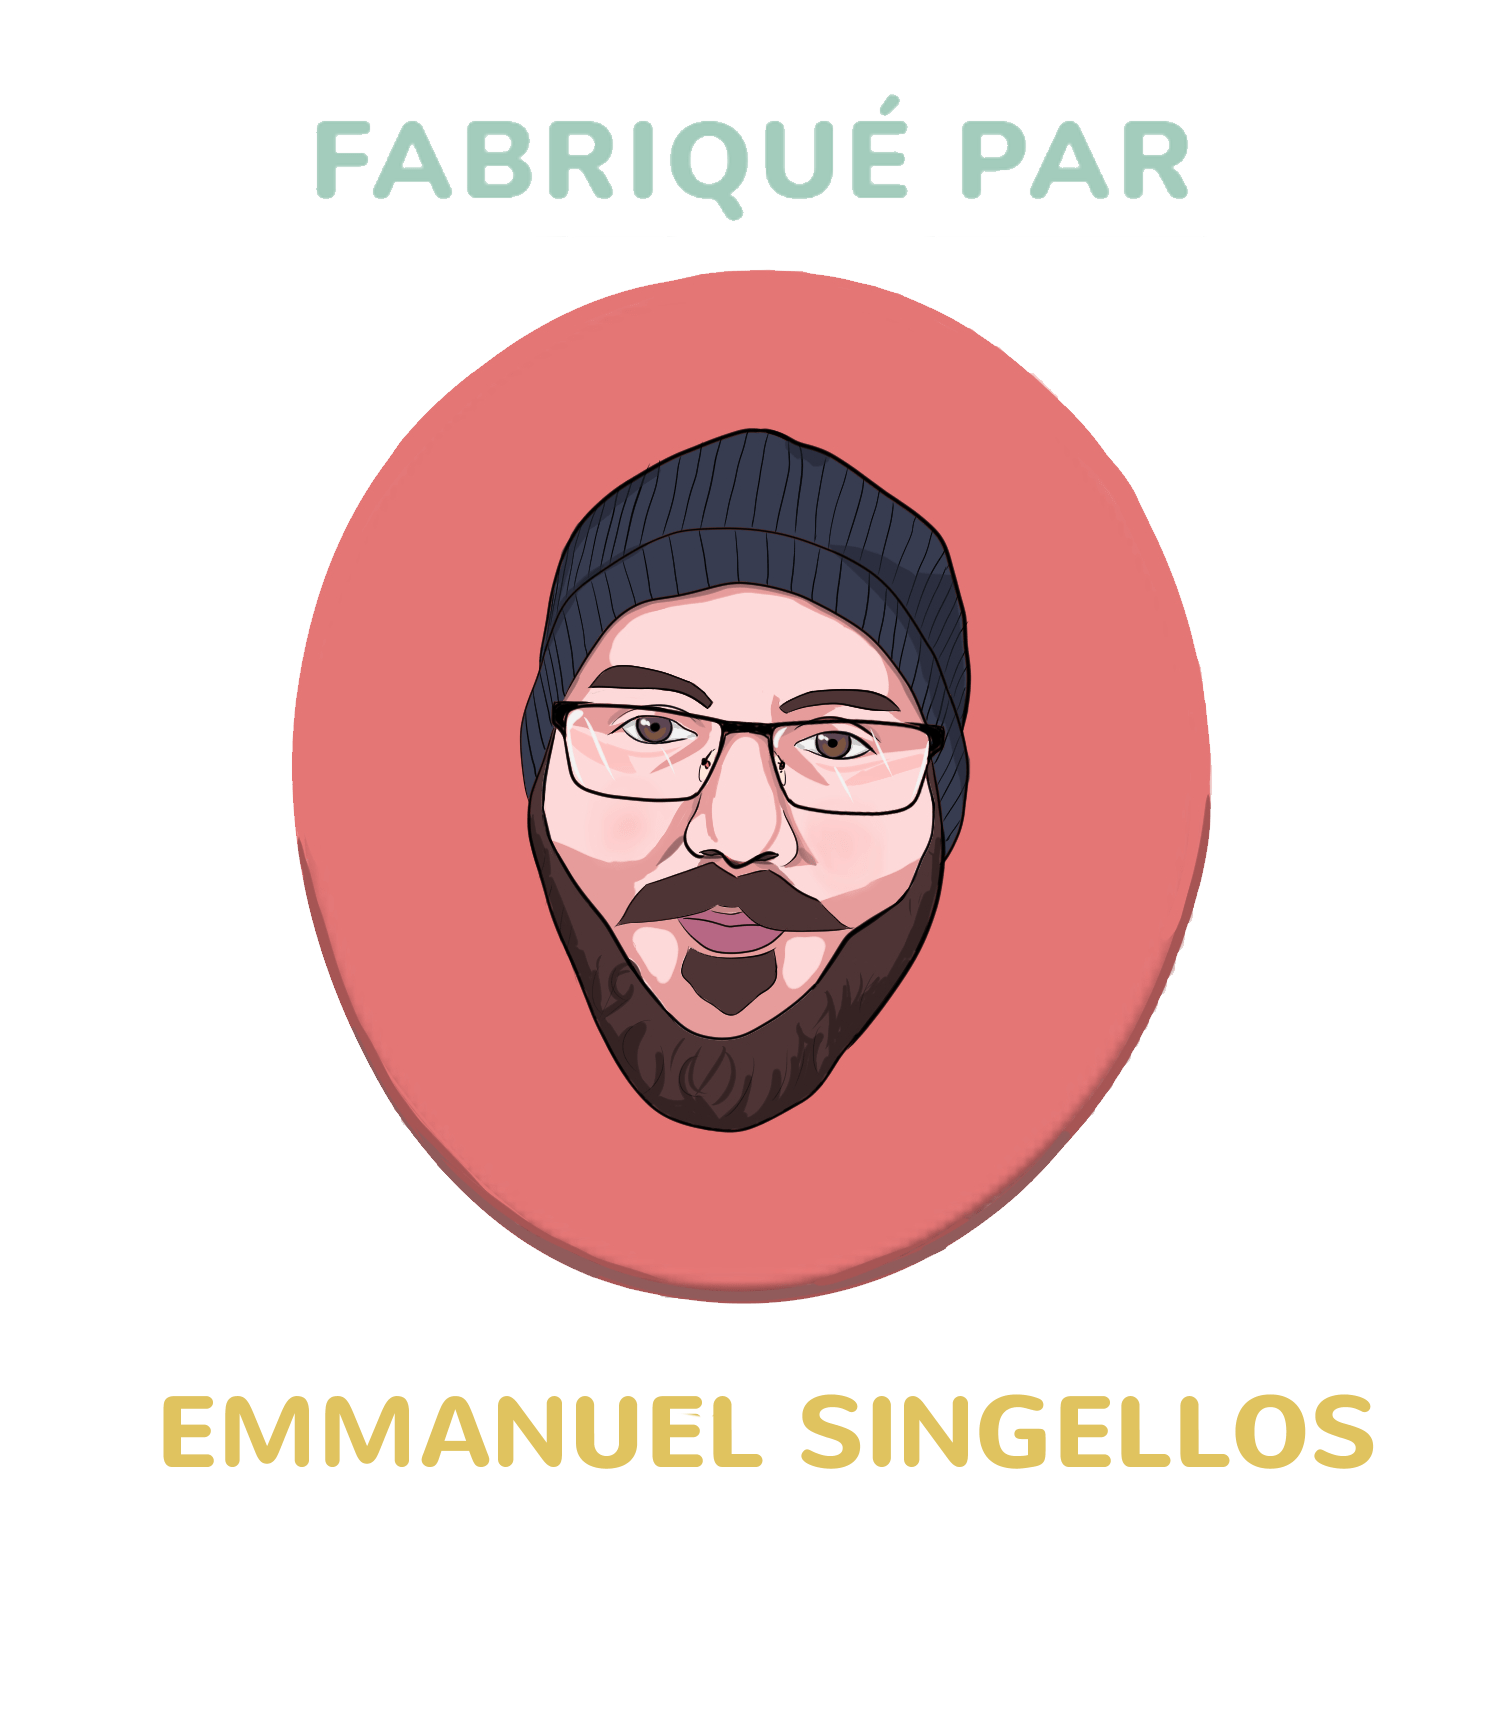 Emmanuel Singellos